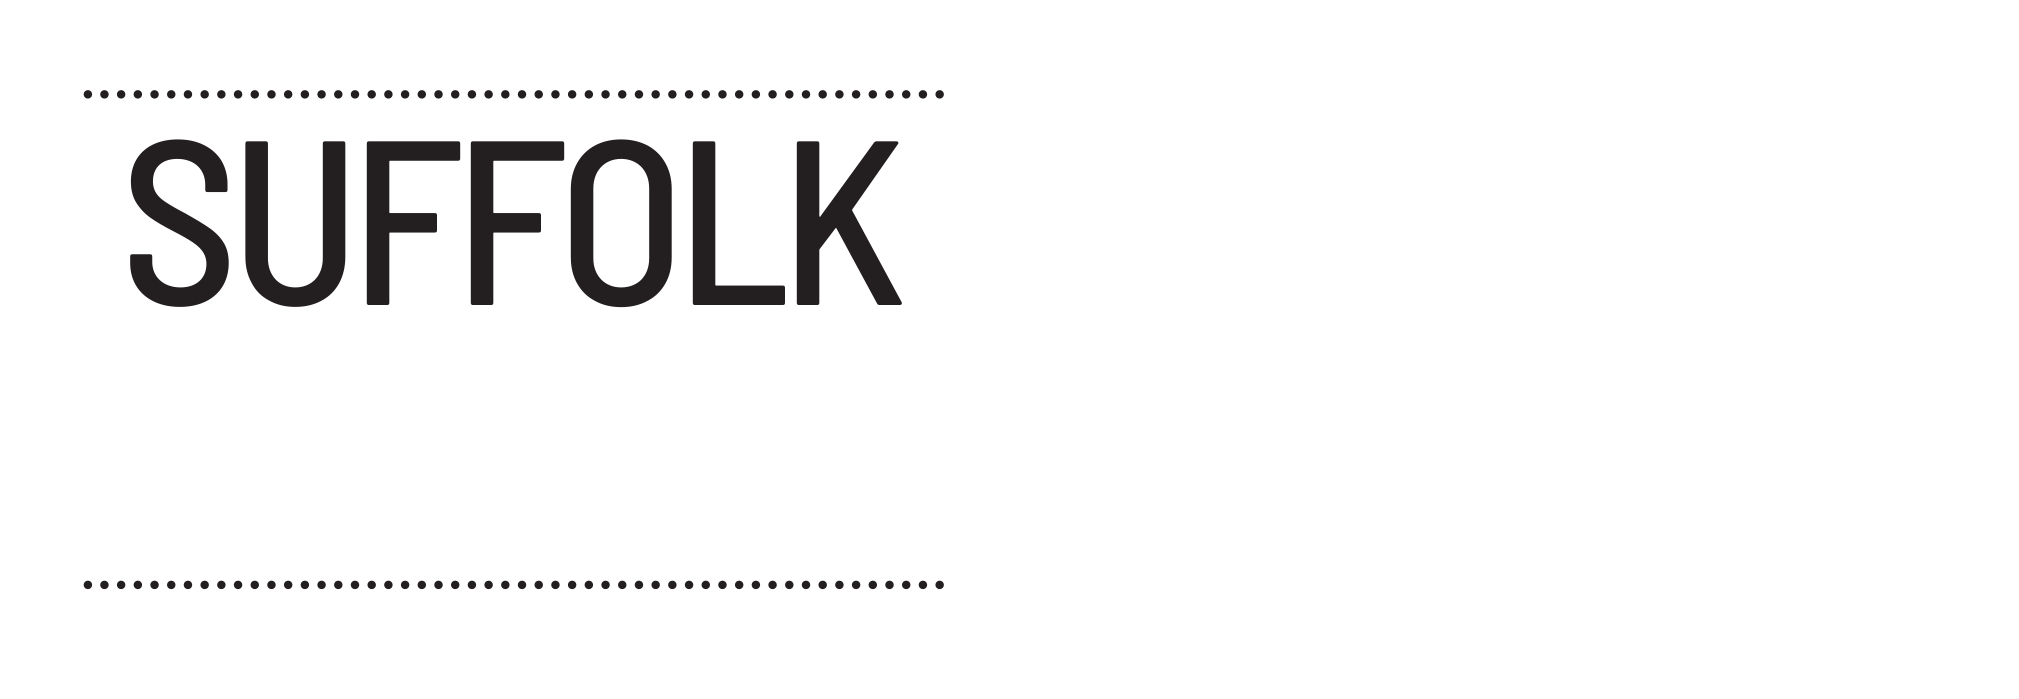 Suffolk History Hub